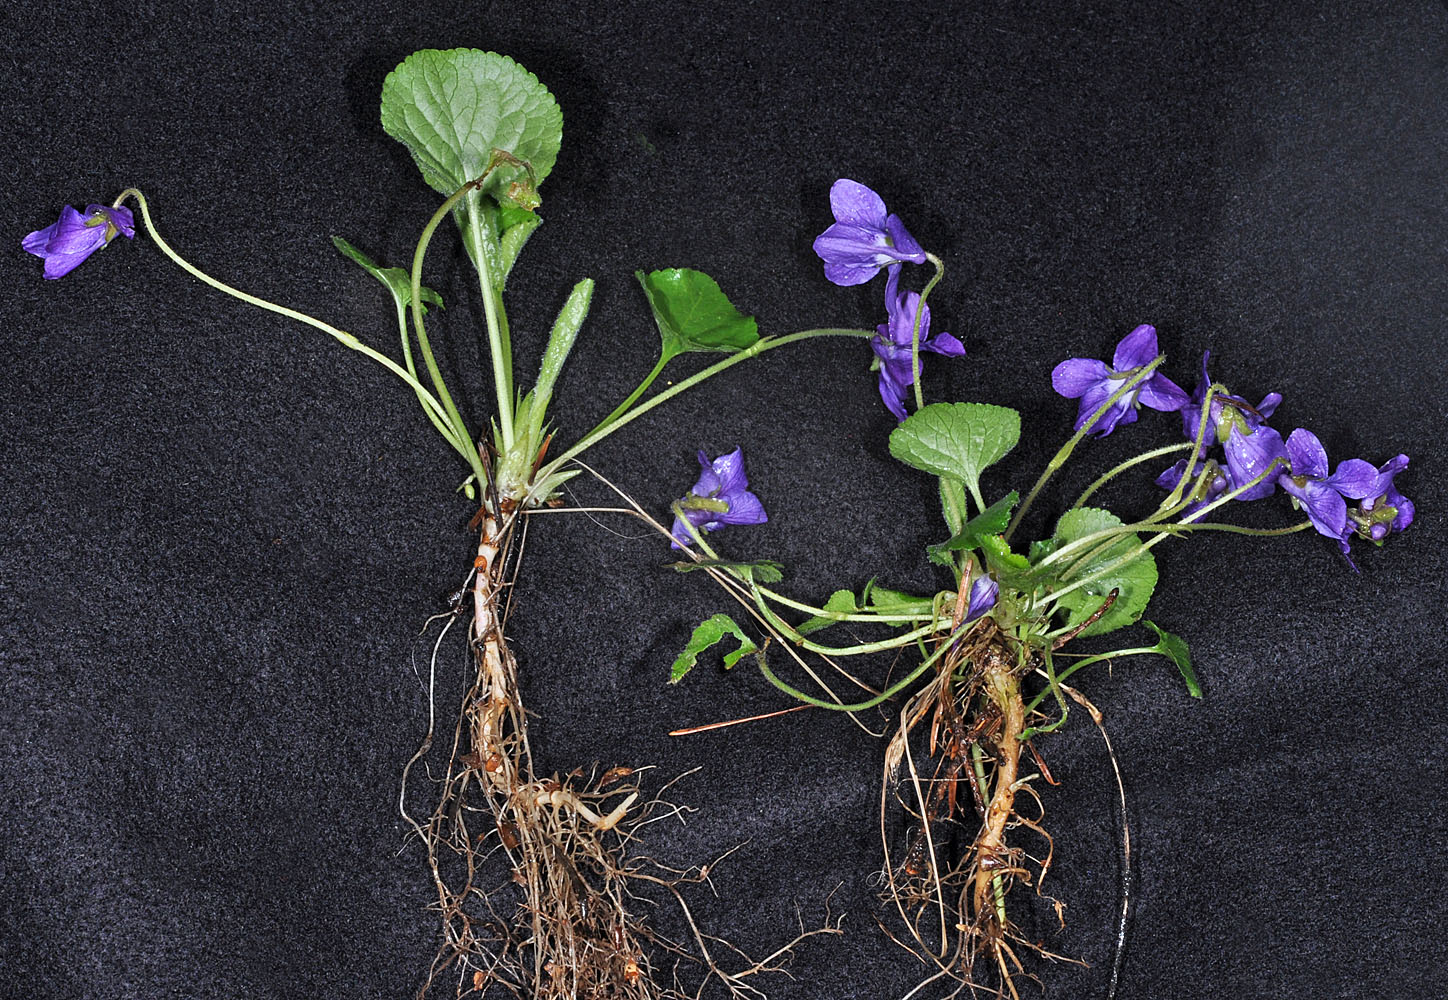 Flora of Eastern Washington Image: Viola odorata